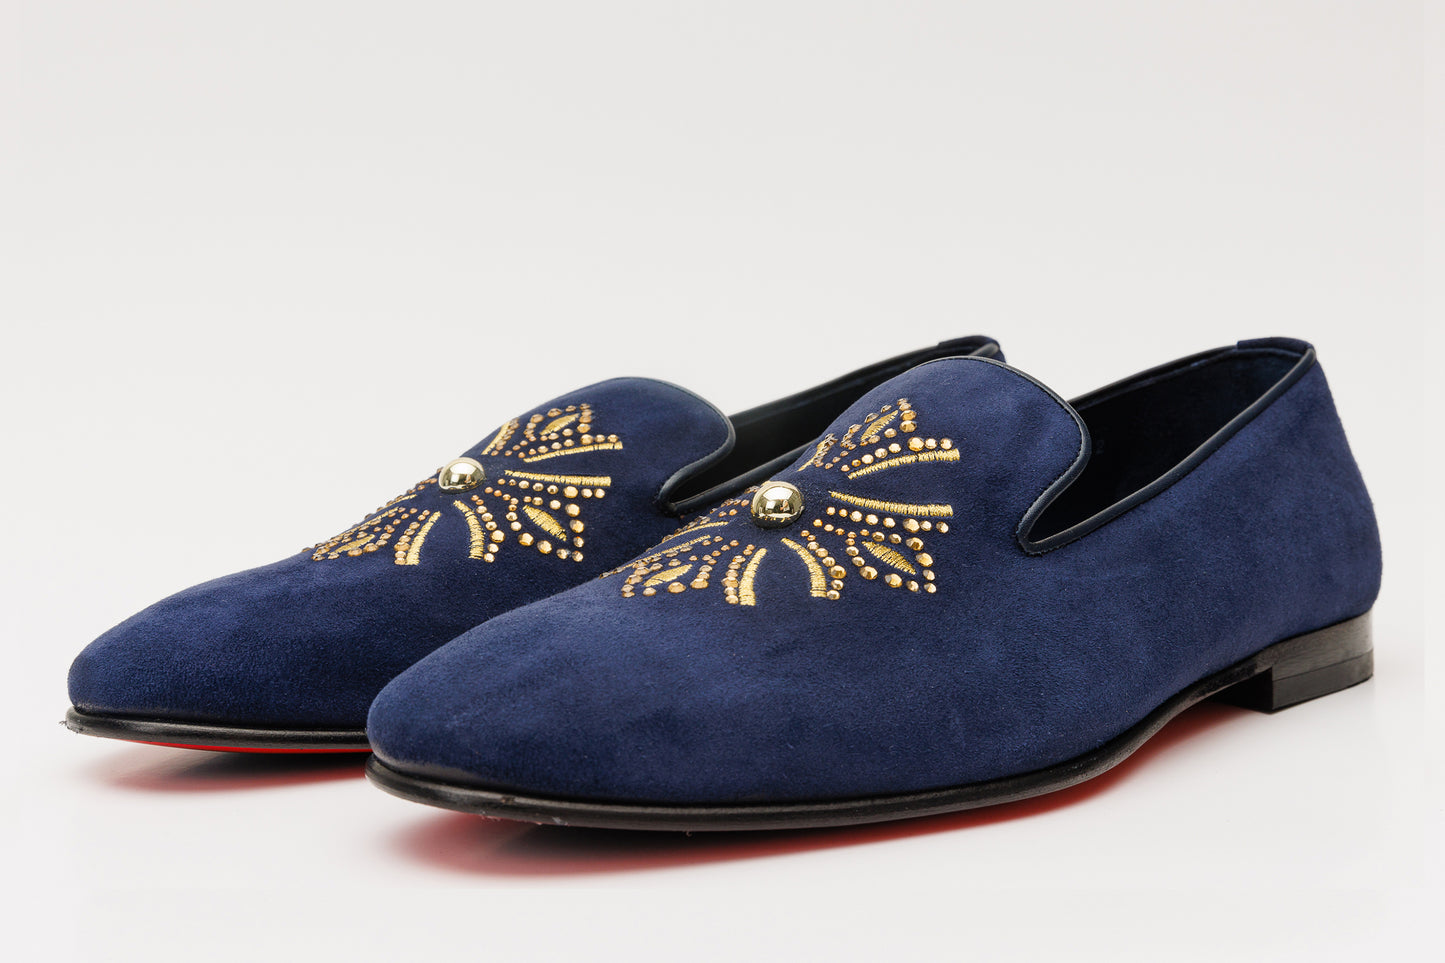 The Lazio Shoe Navy Blue Suede Slip-on Loafer Men Shoe – Vinci Leather ...